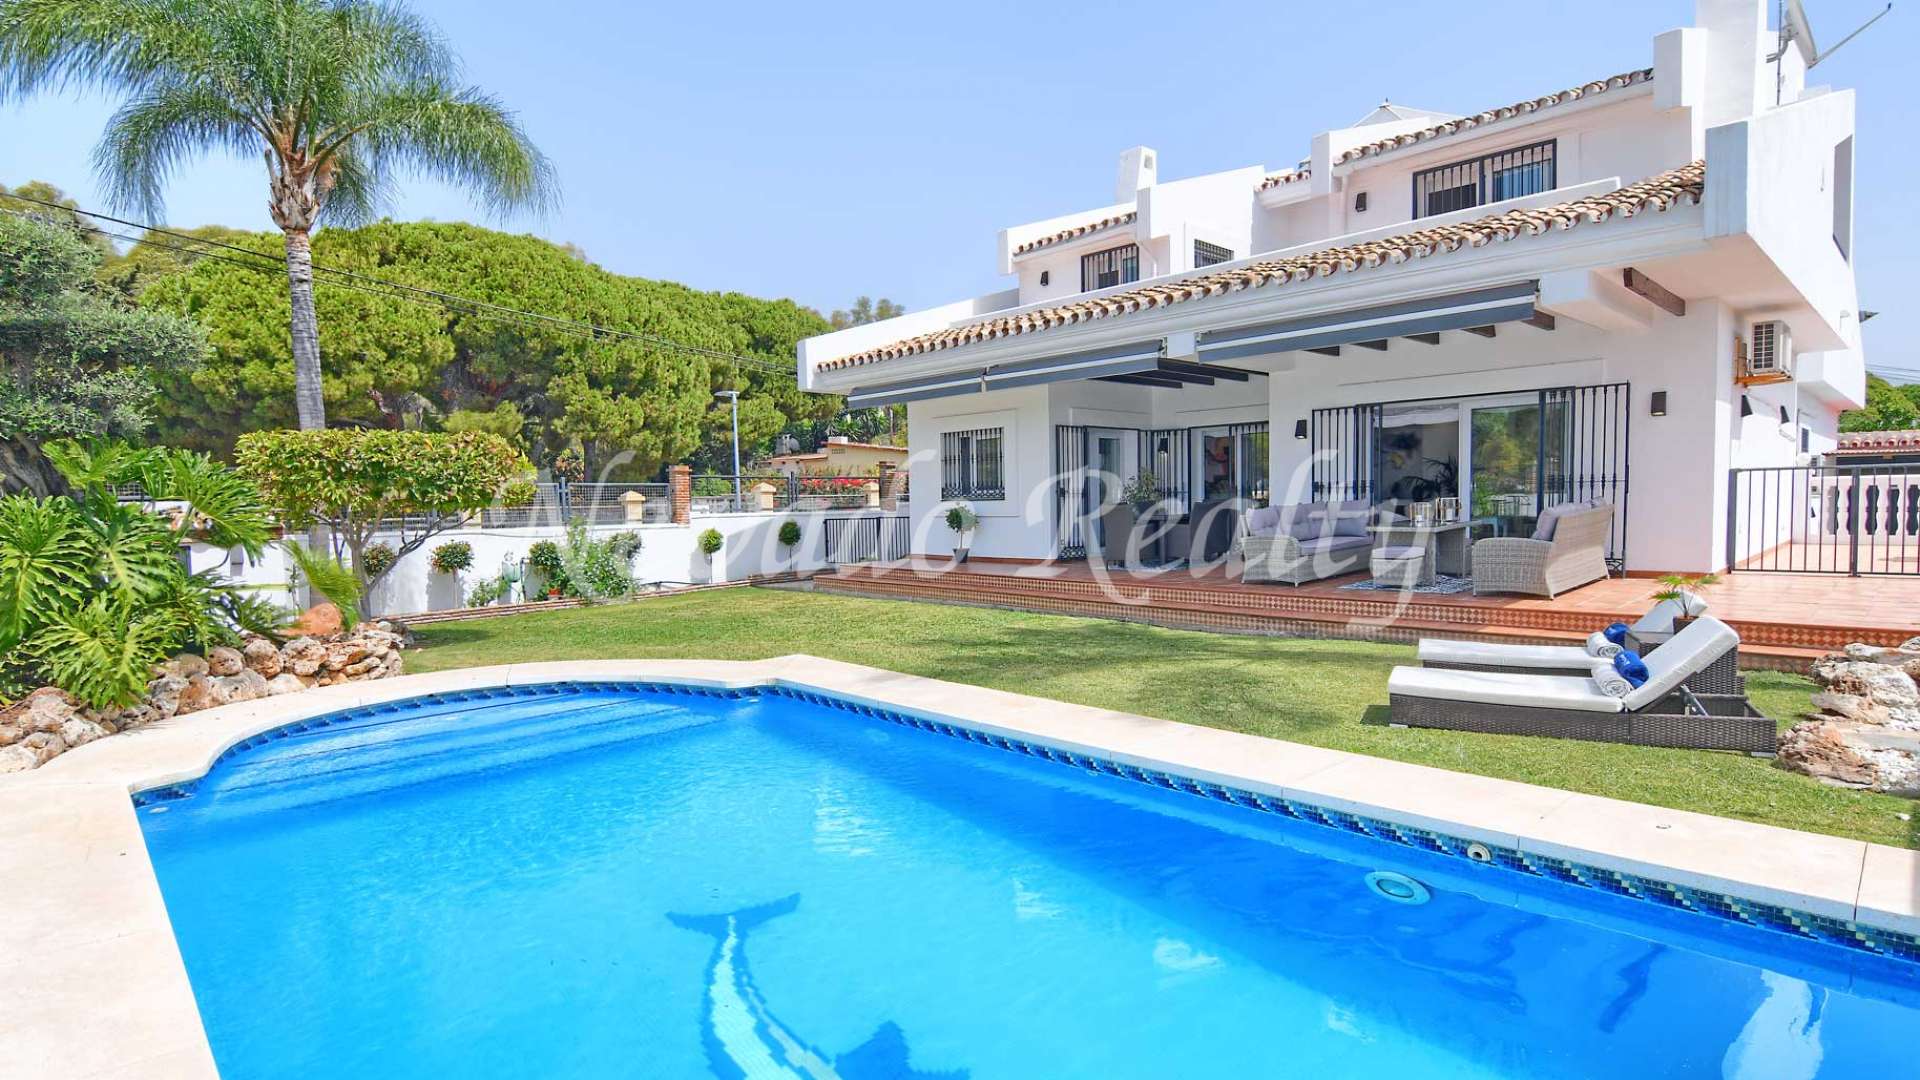 Villa dans le centre de Marbella à vendre